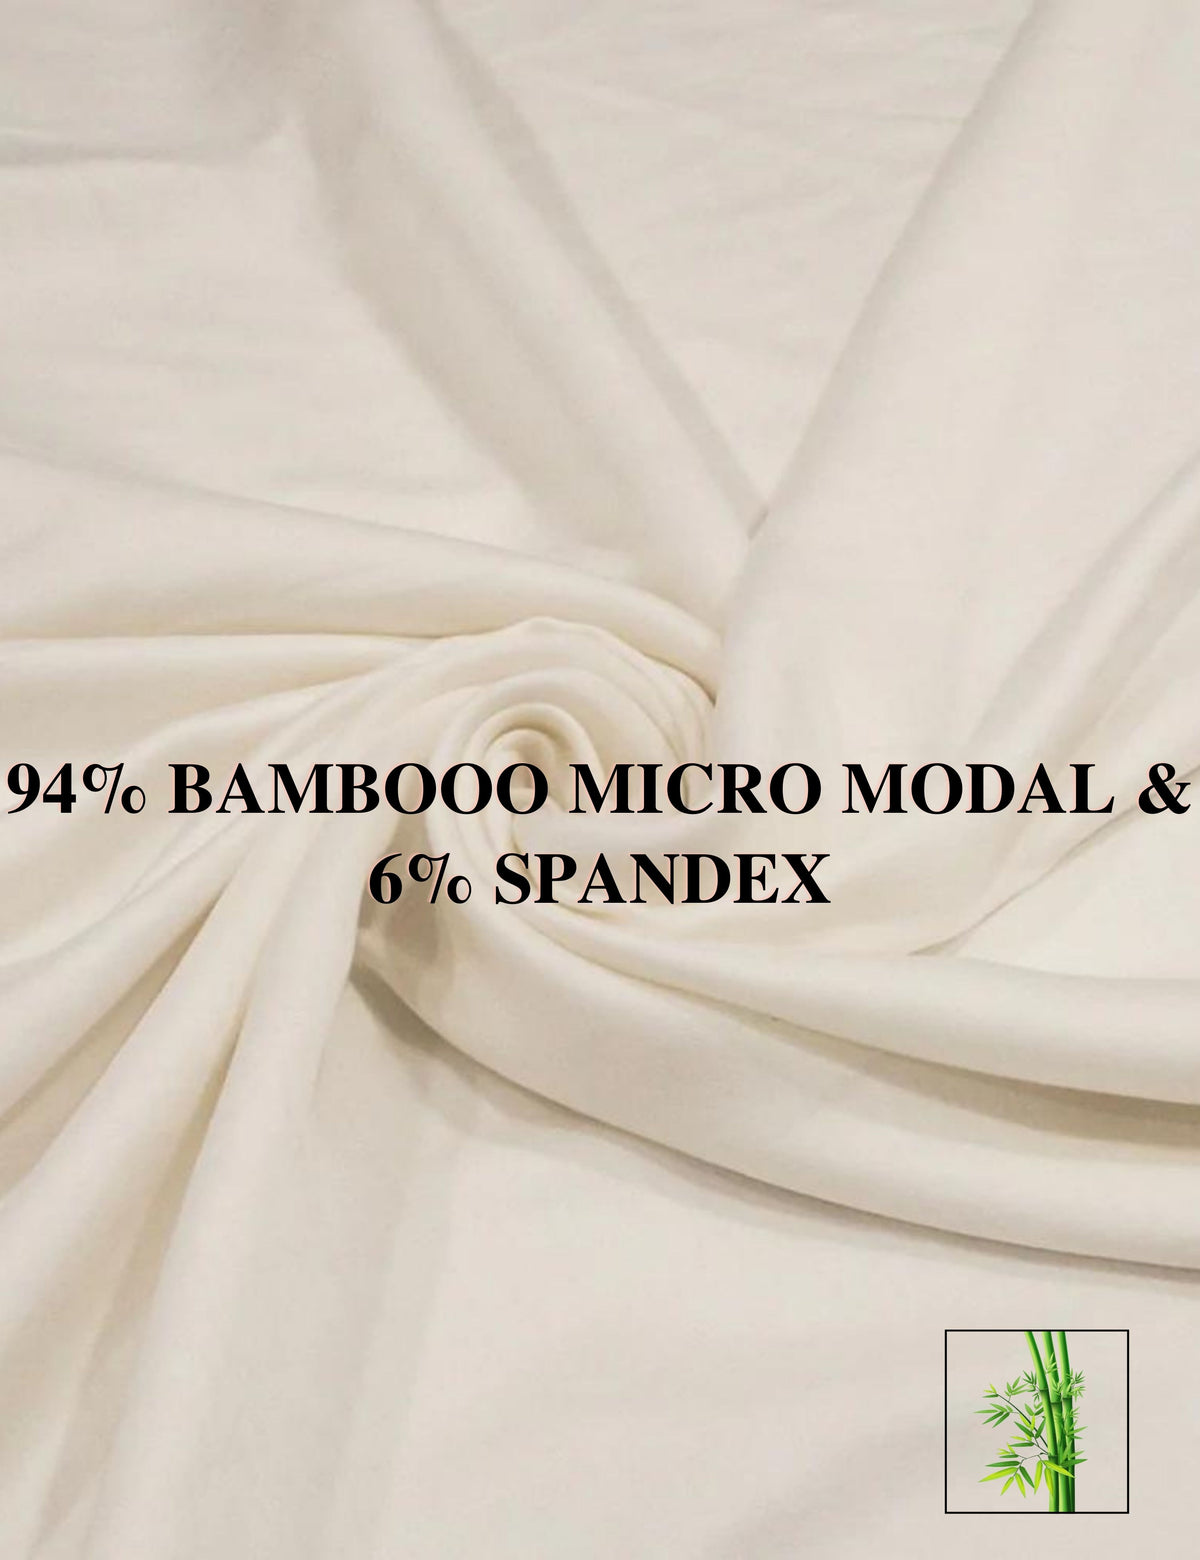 AshleyandAlvis Bamboo Micro Modal antibacterial- Hipster panties AN